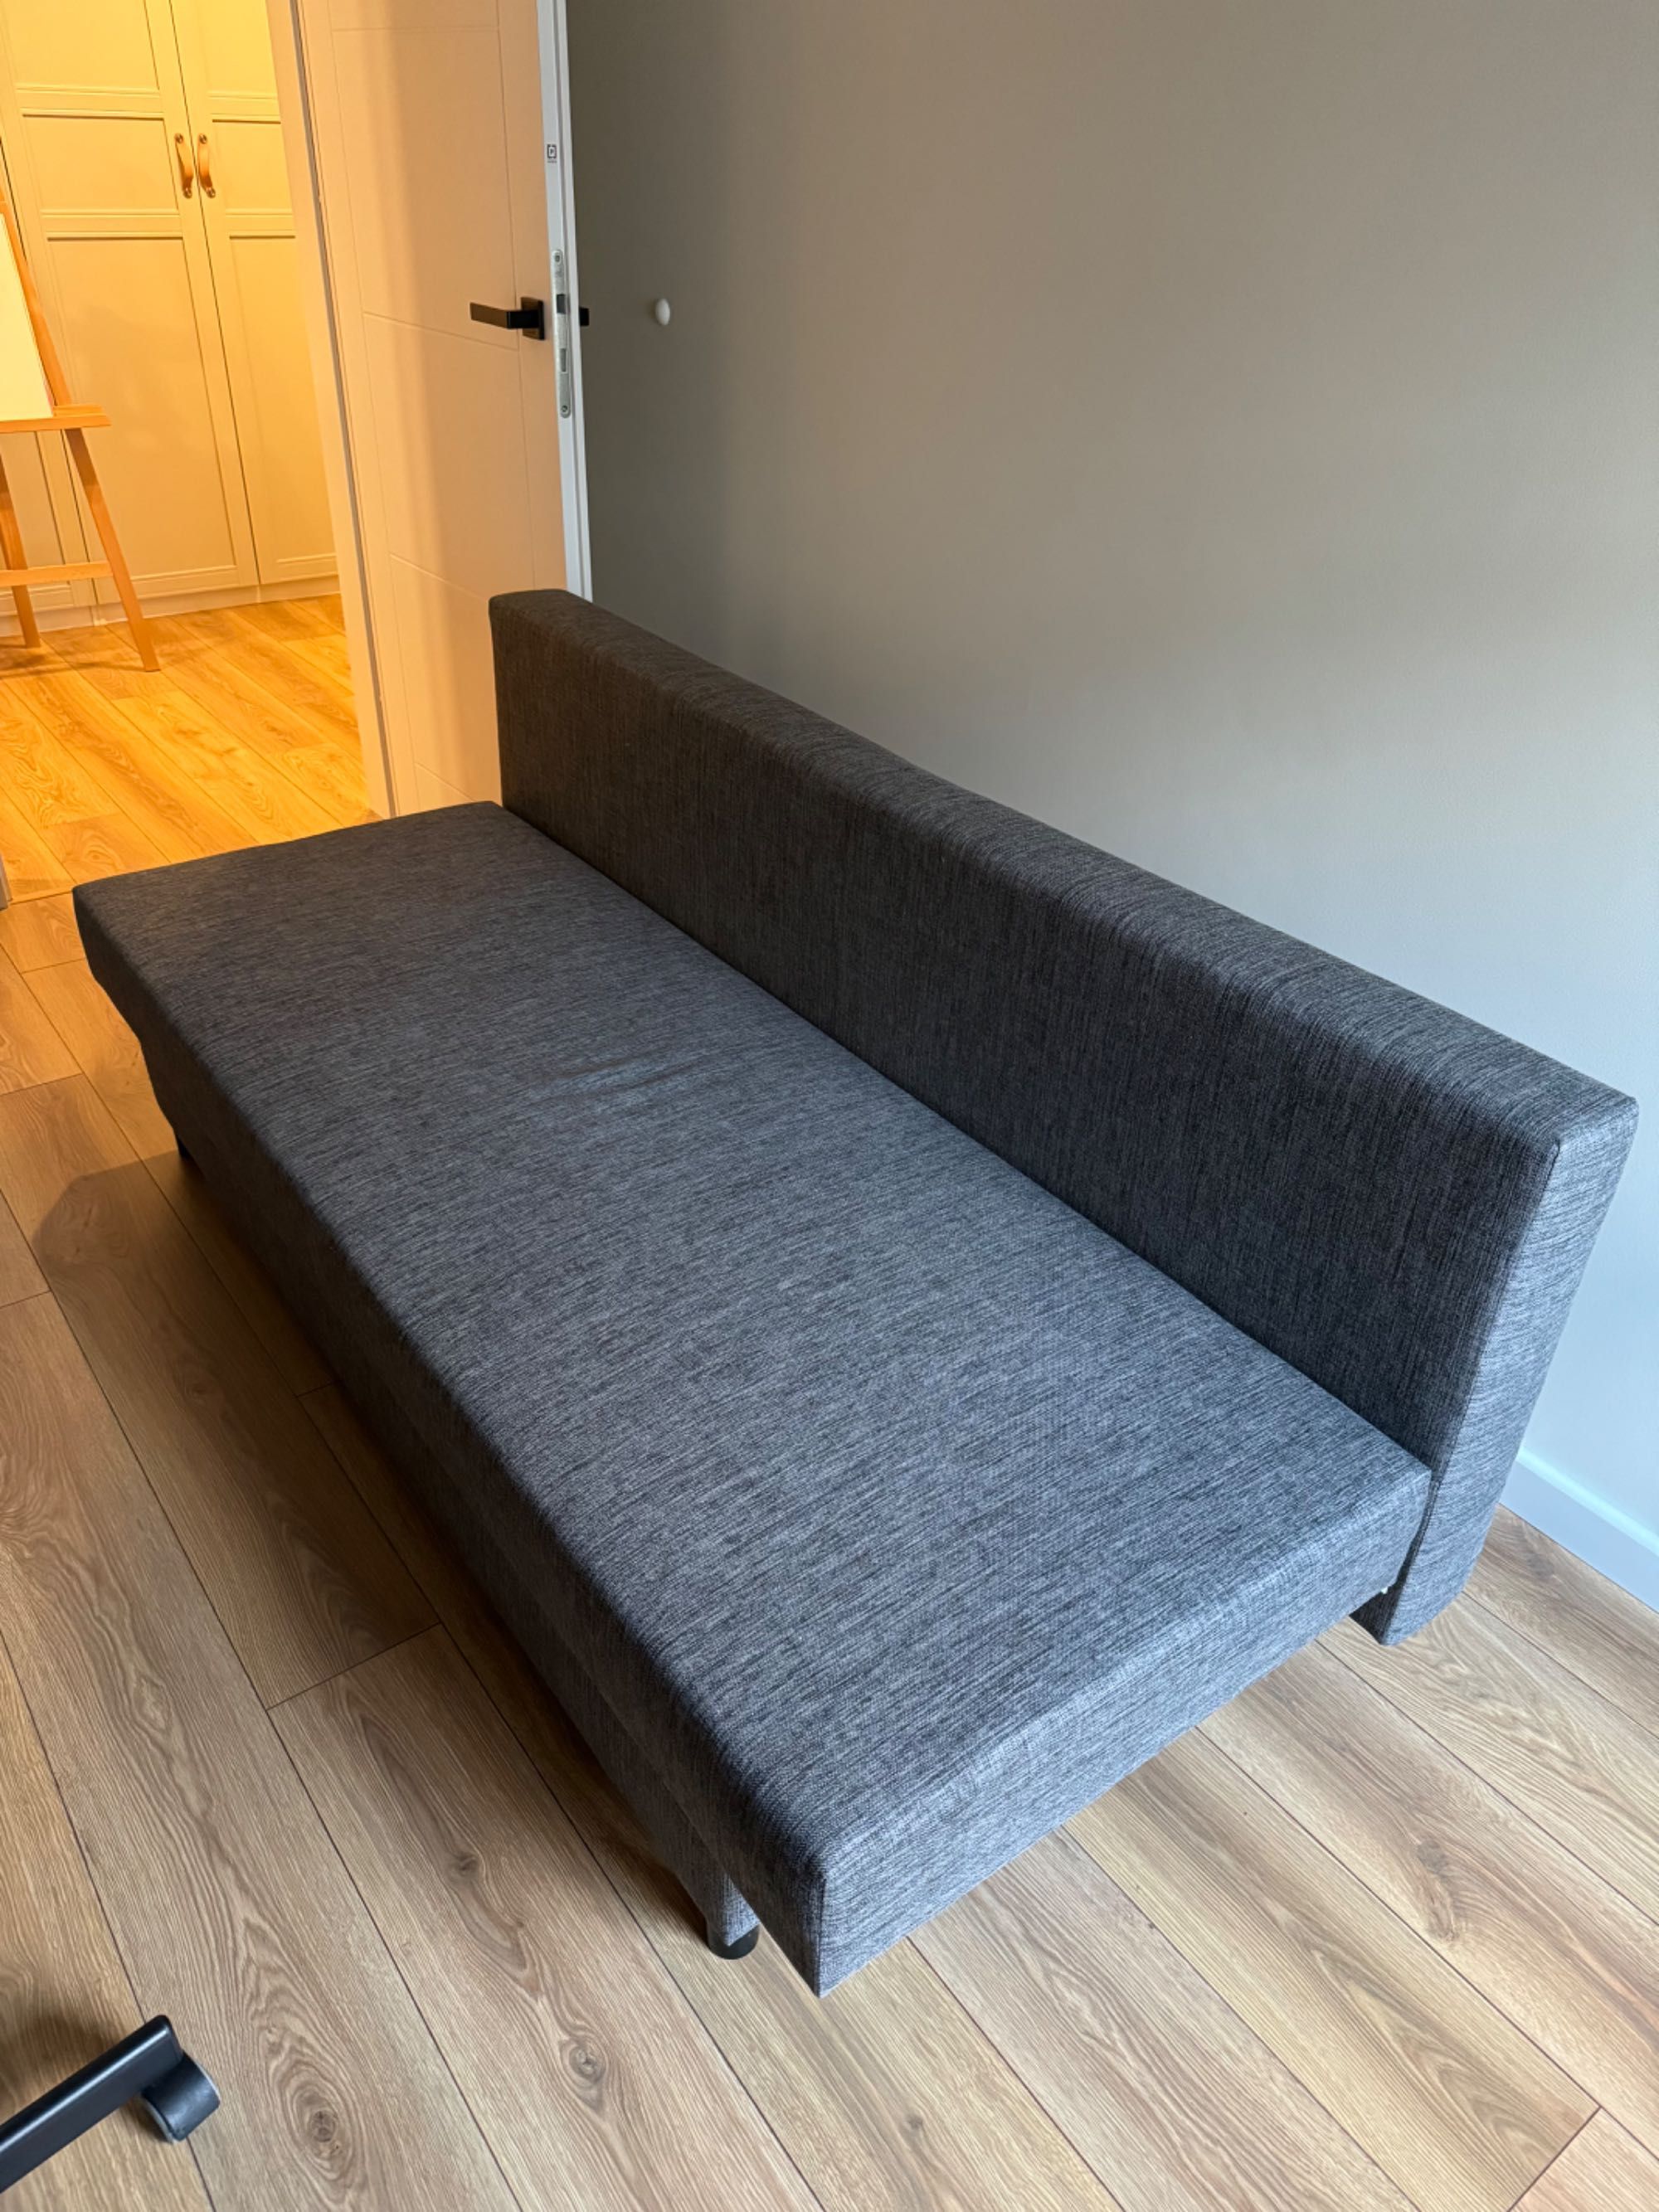 sofę IKEA Asarum